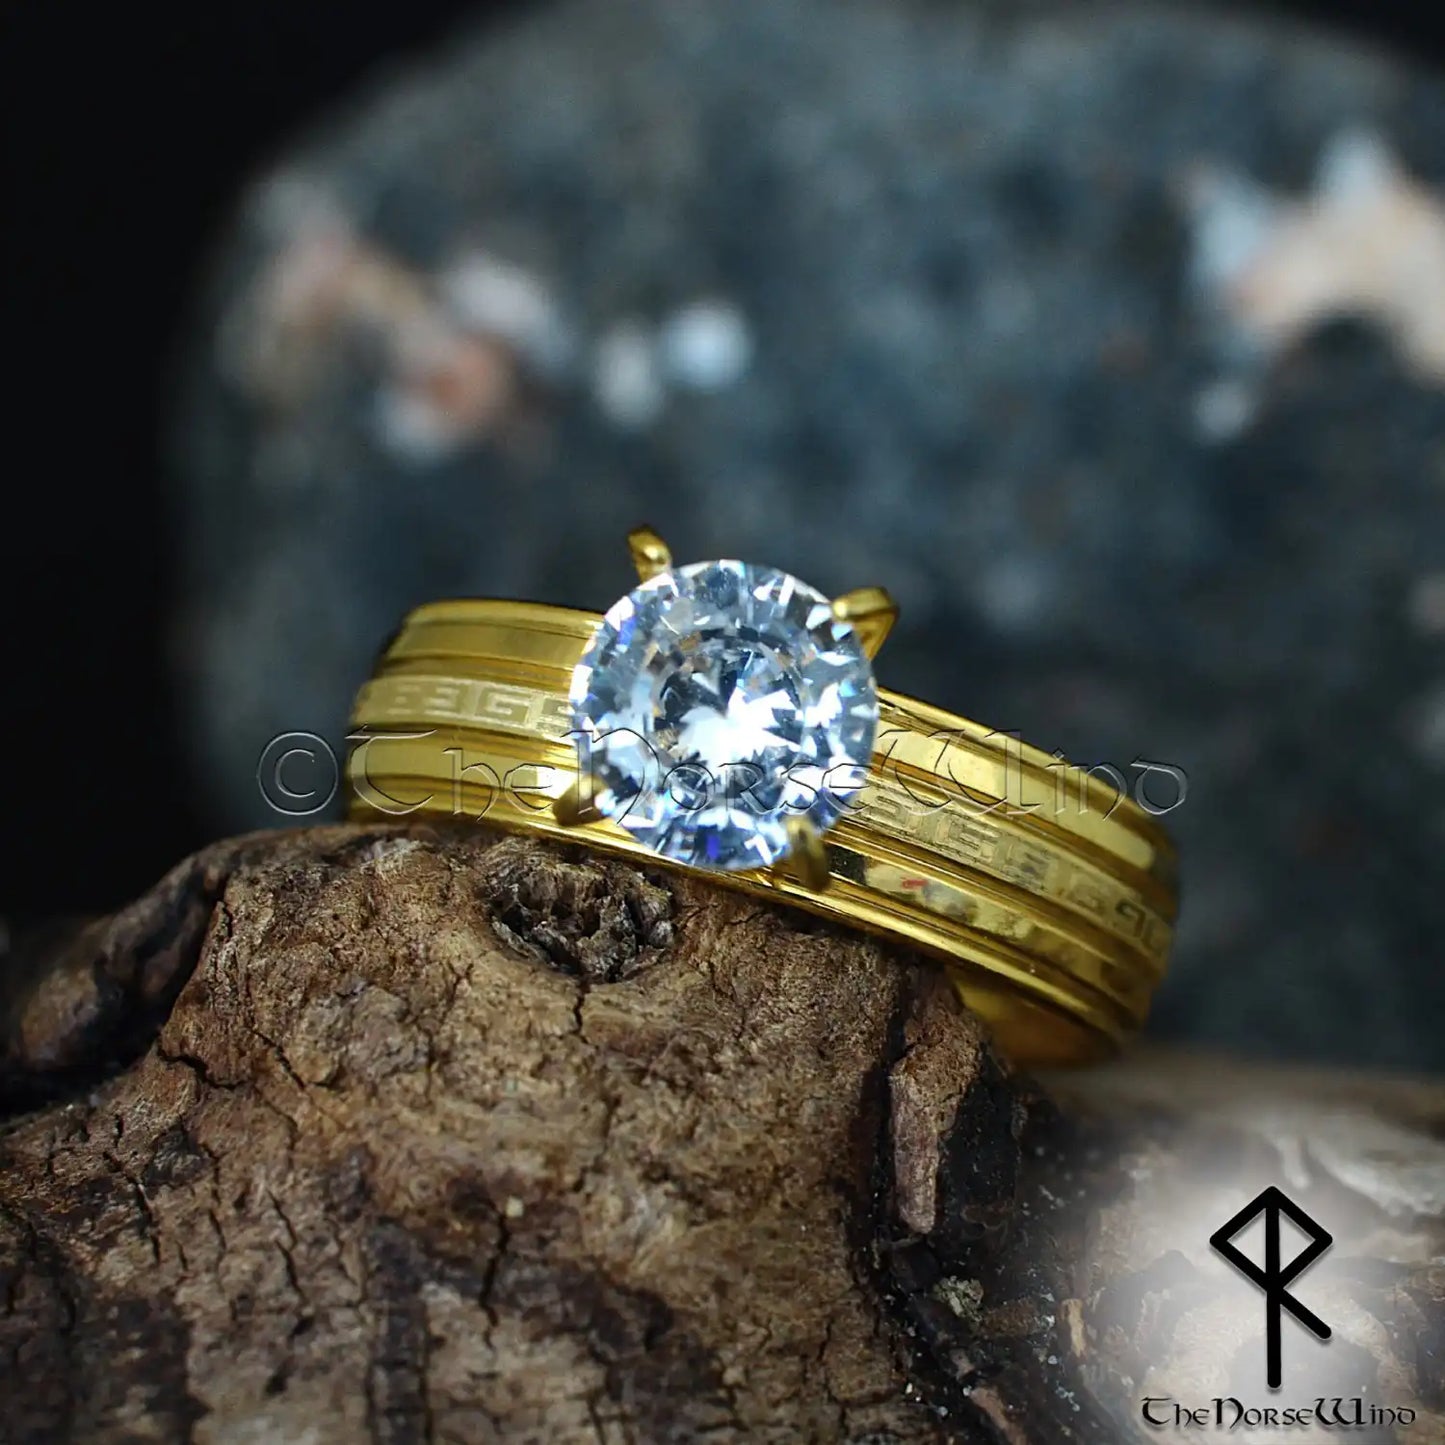 Viking Couple Engagement Rings - Stainless Steel & 14K Gold Plating